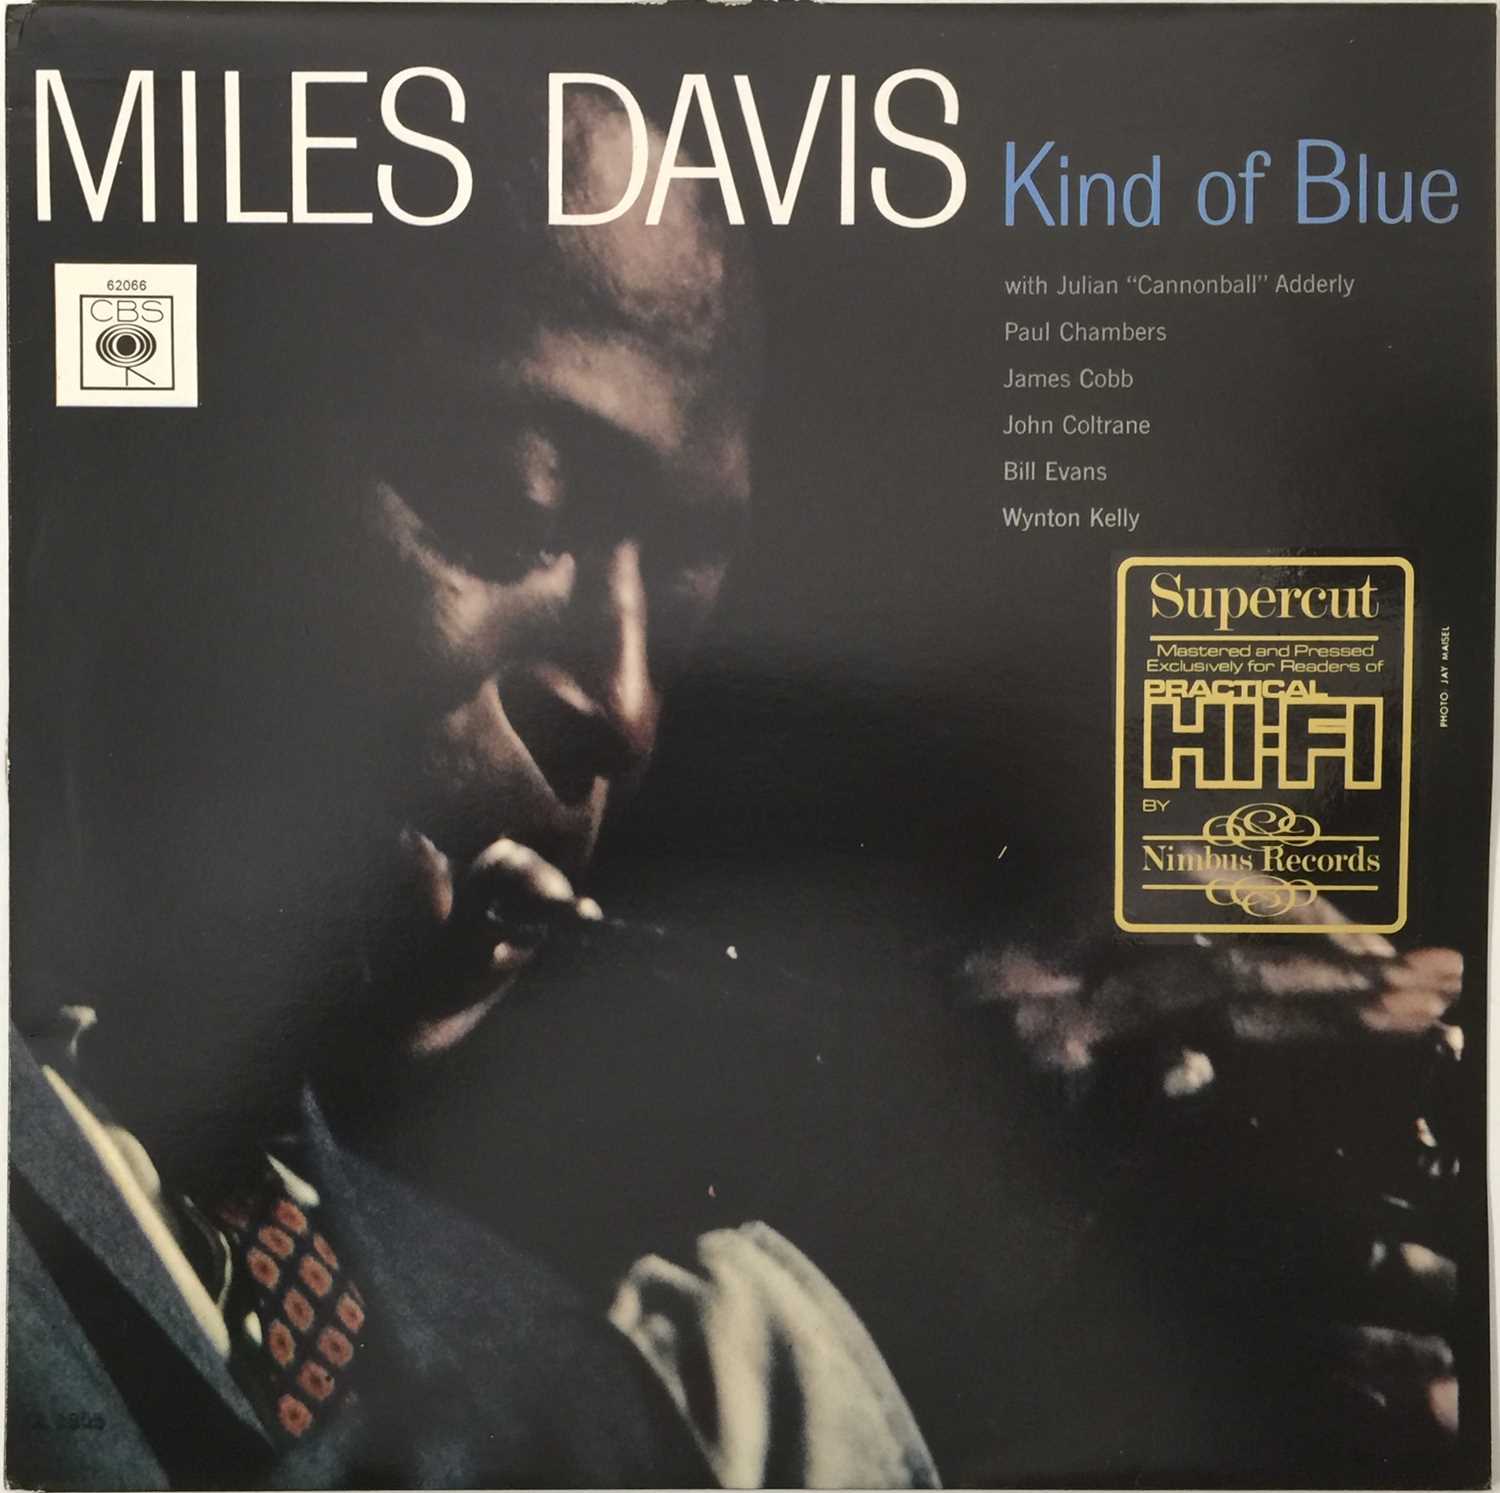 MILES DAVIS - KIND OF BLUE LP (CBS BPG 62066 - NIMBUS PRESSING) - Image 2 of 5